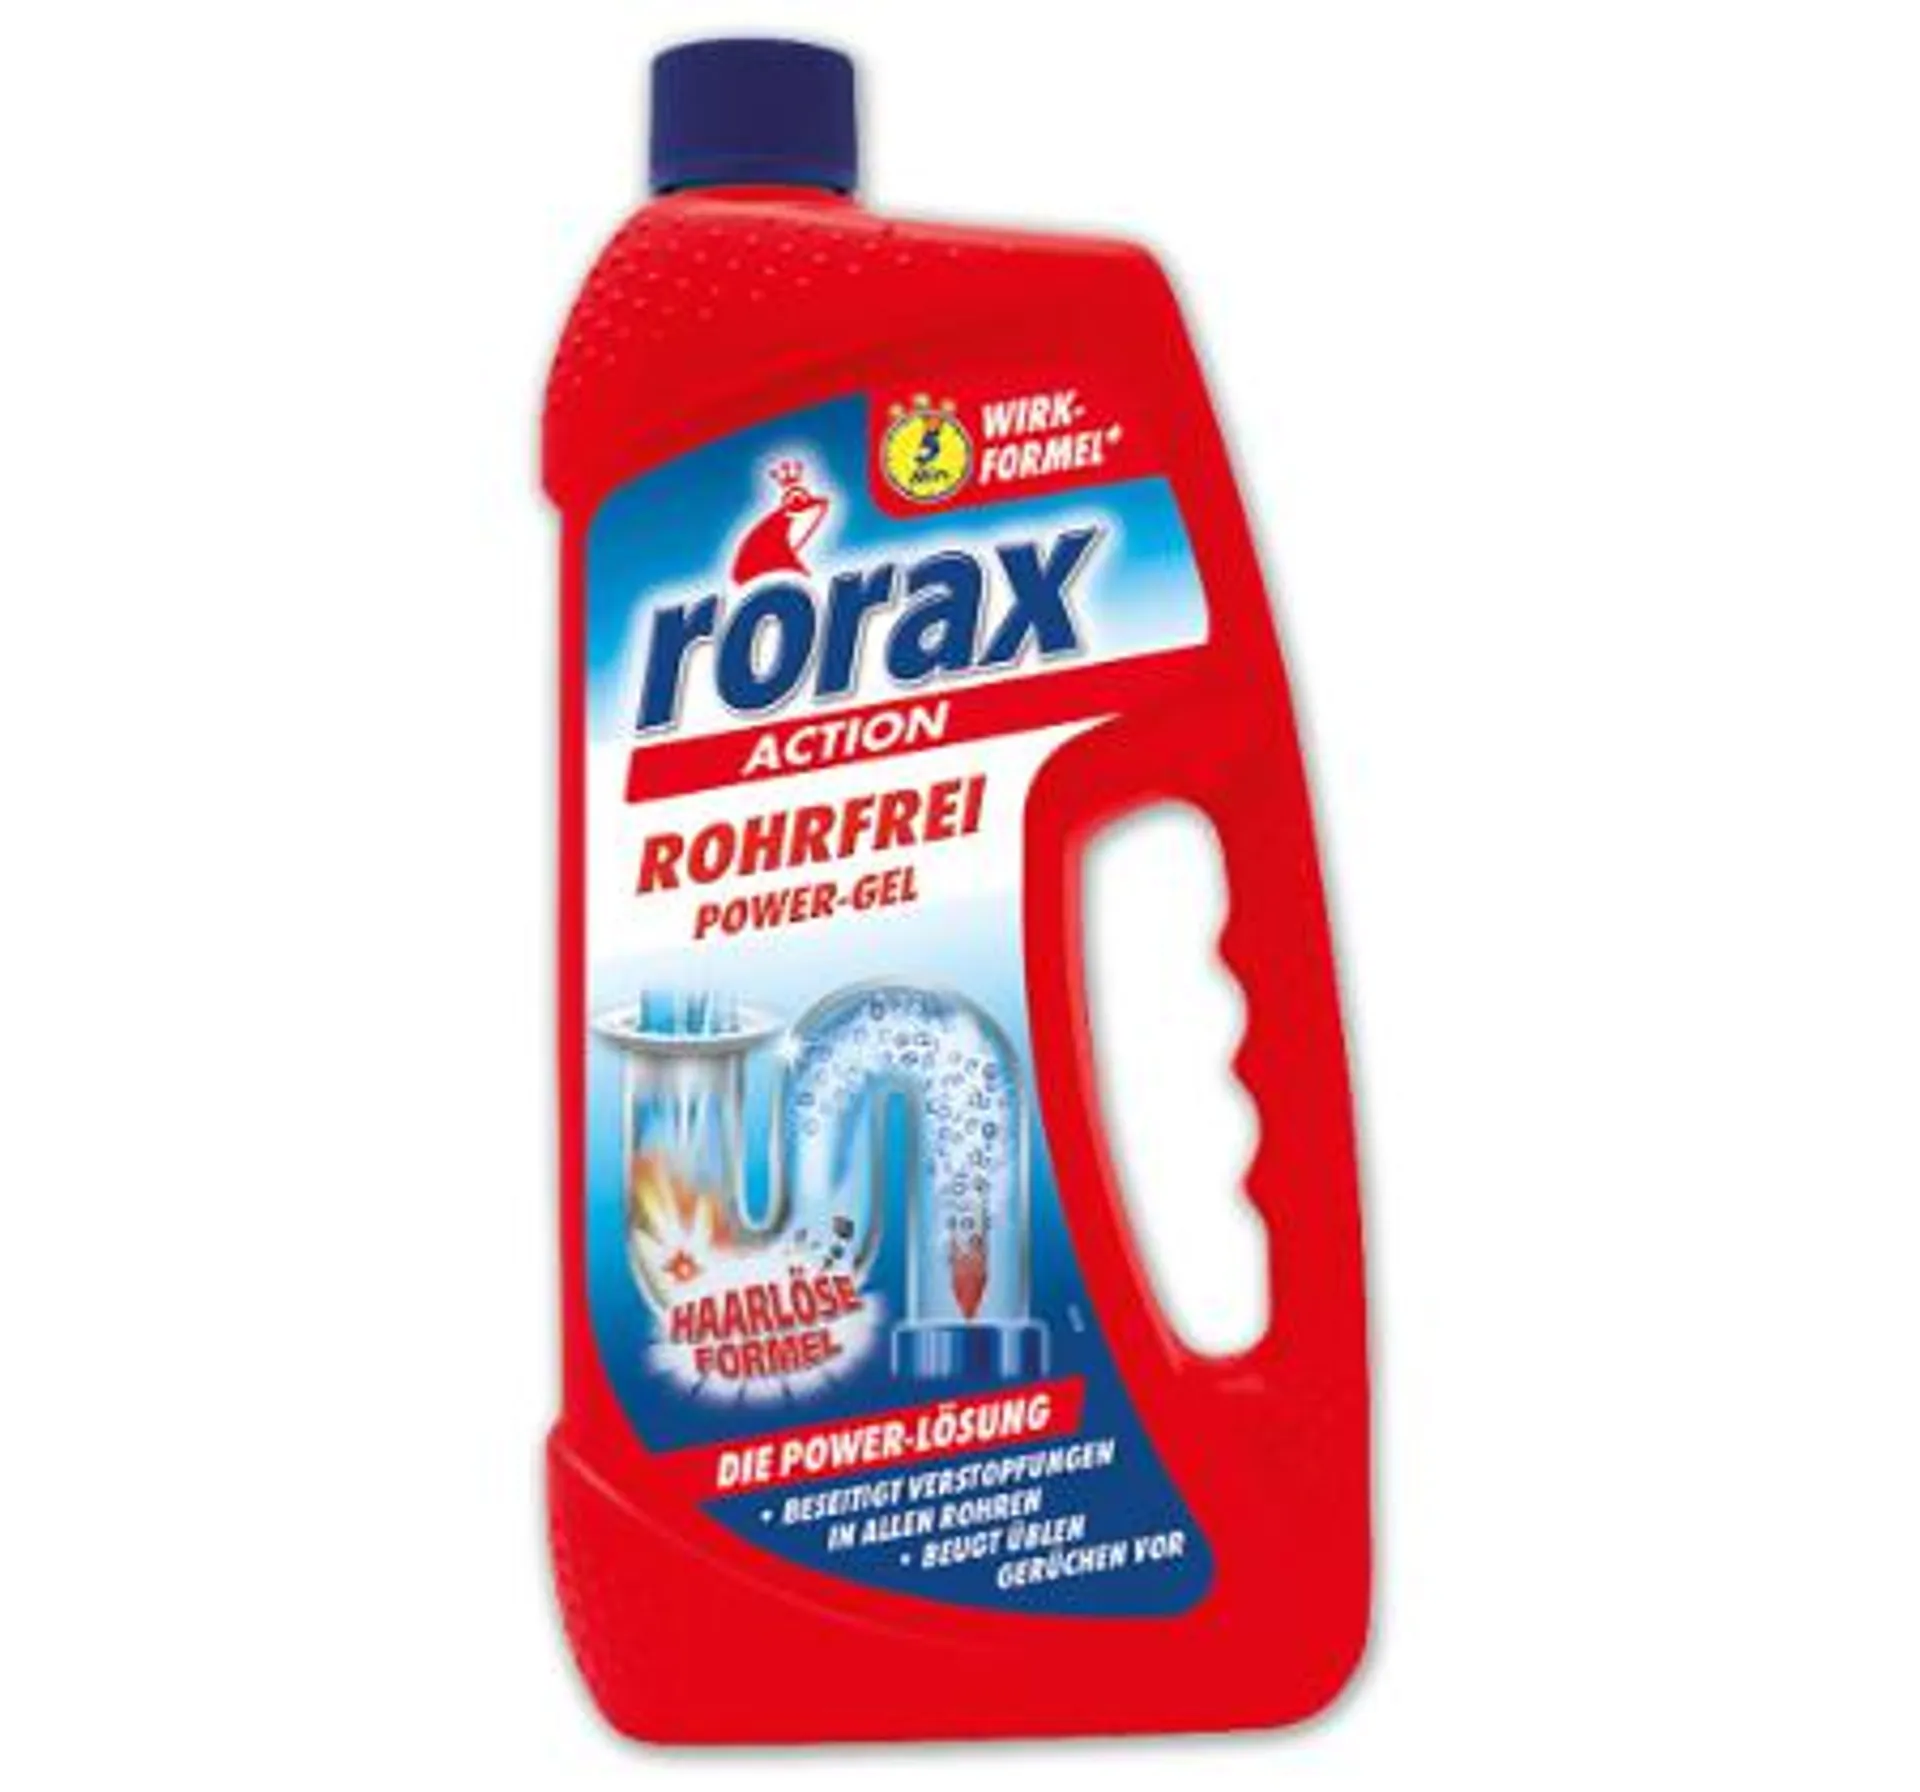 RORAX Rohrfrei Power-Gel*